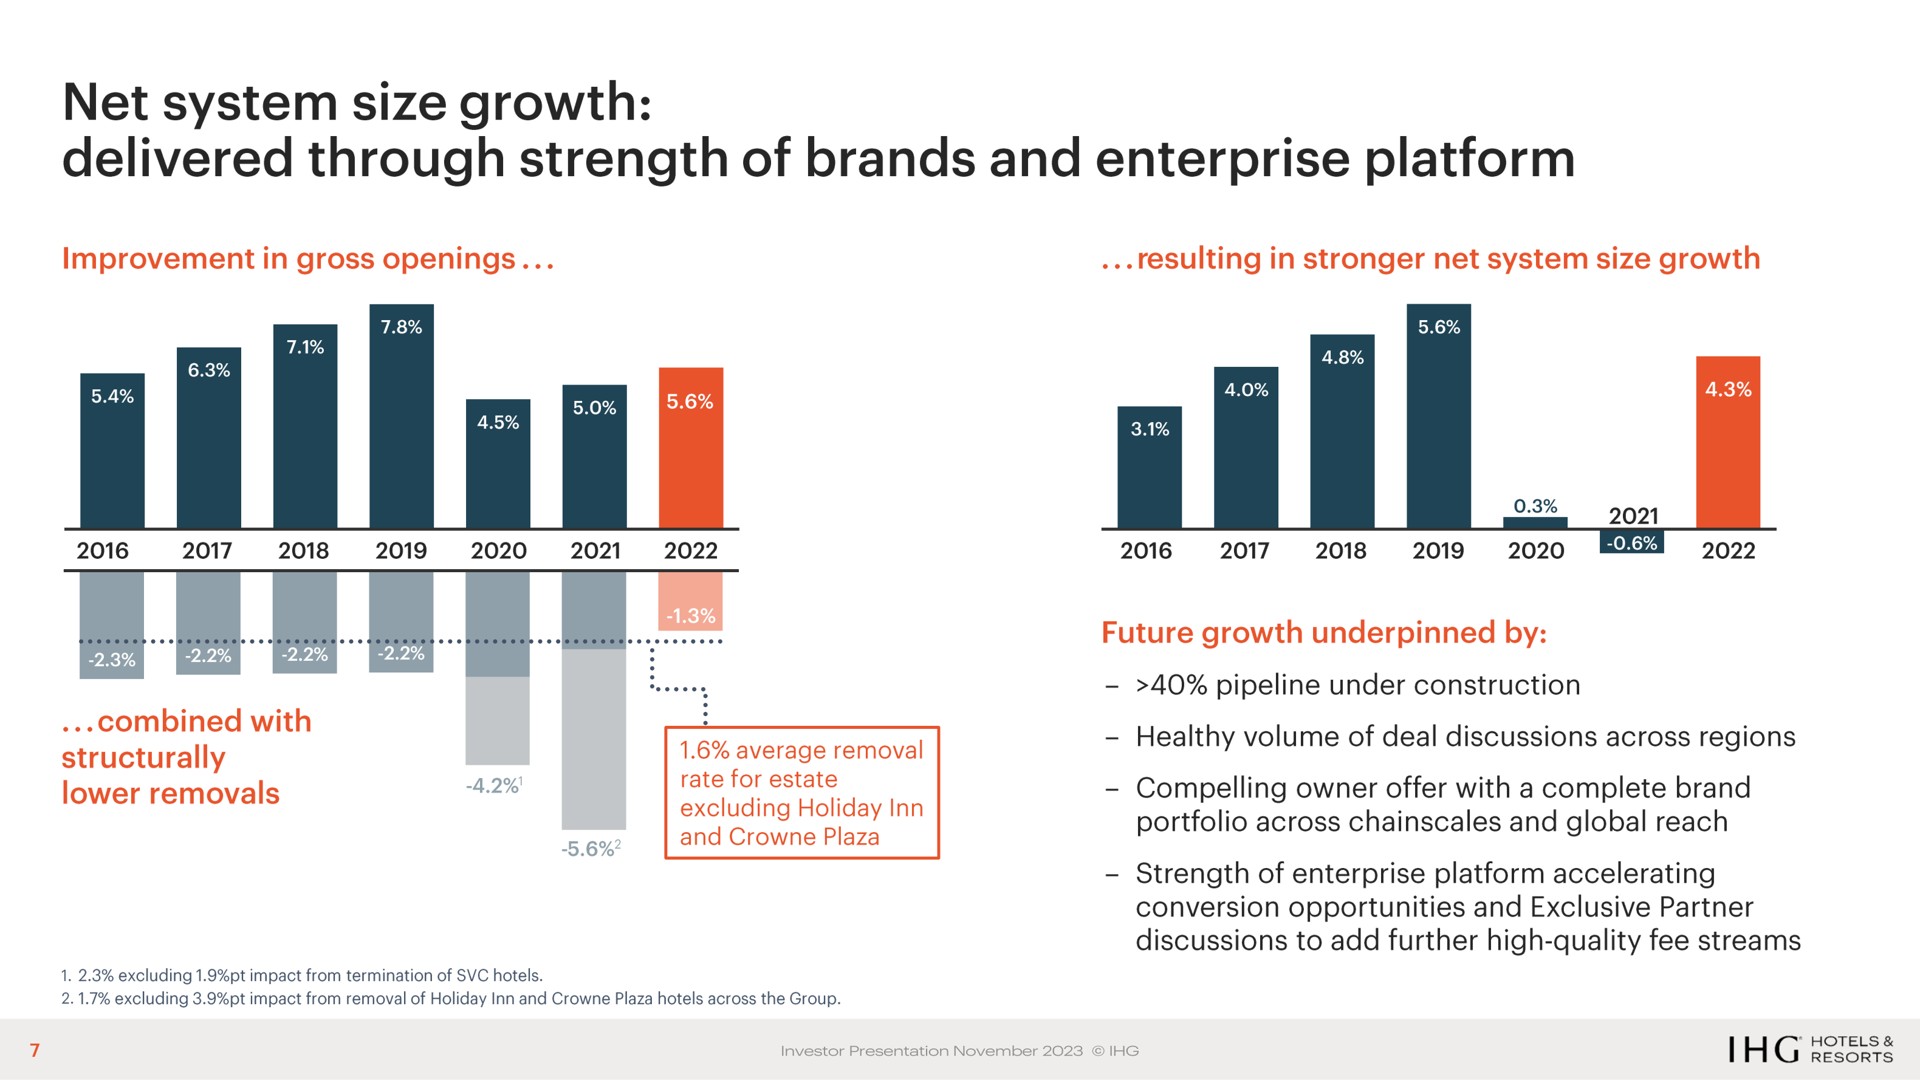 net system size growth delivered through strength of brands and enterprise platform | IHG Hotels